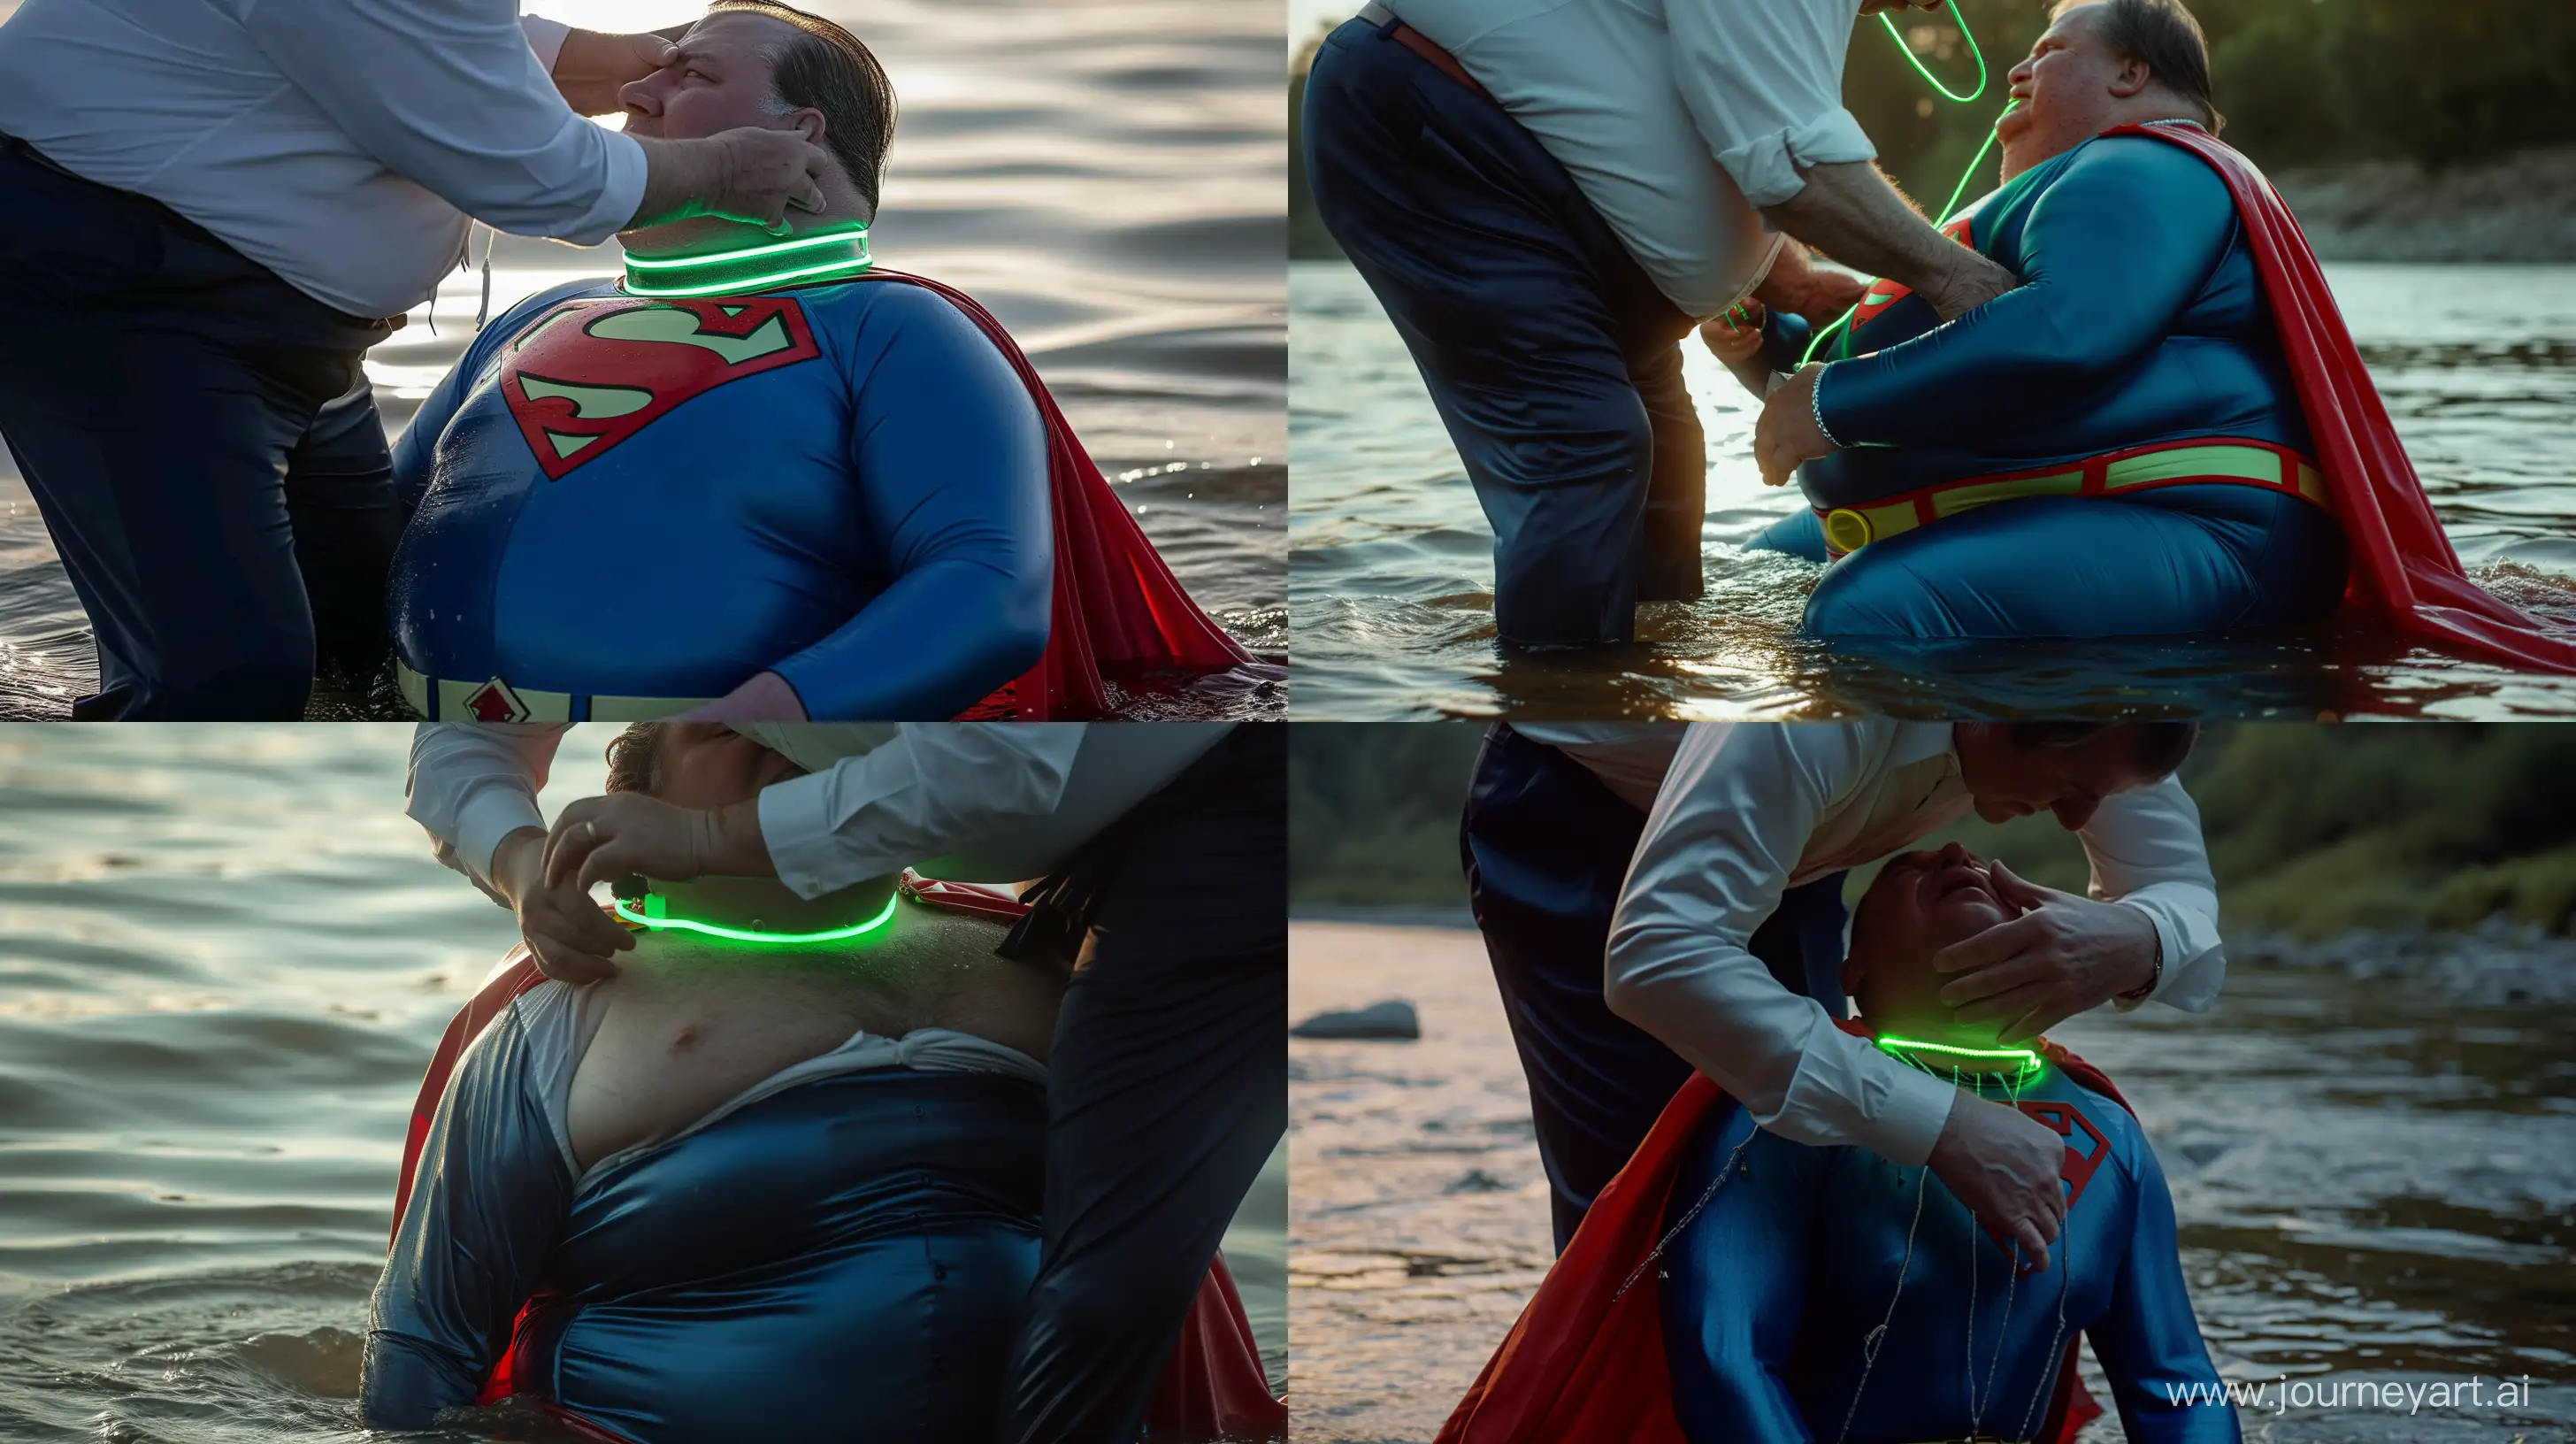 Eccentric-River-Scene-Elderly-Man-in-Vintage-Superman-Costume-with-Neon-Dog-Collar